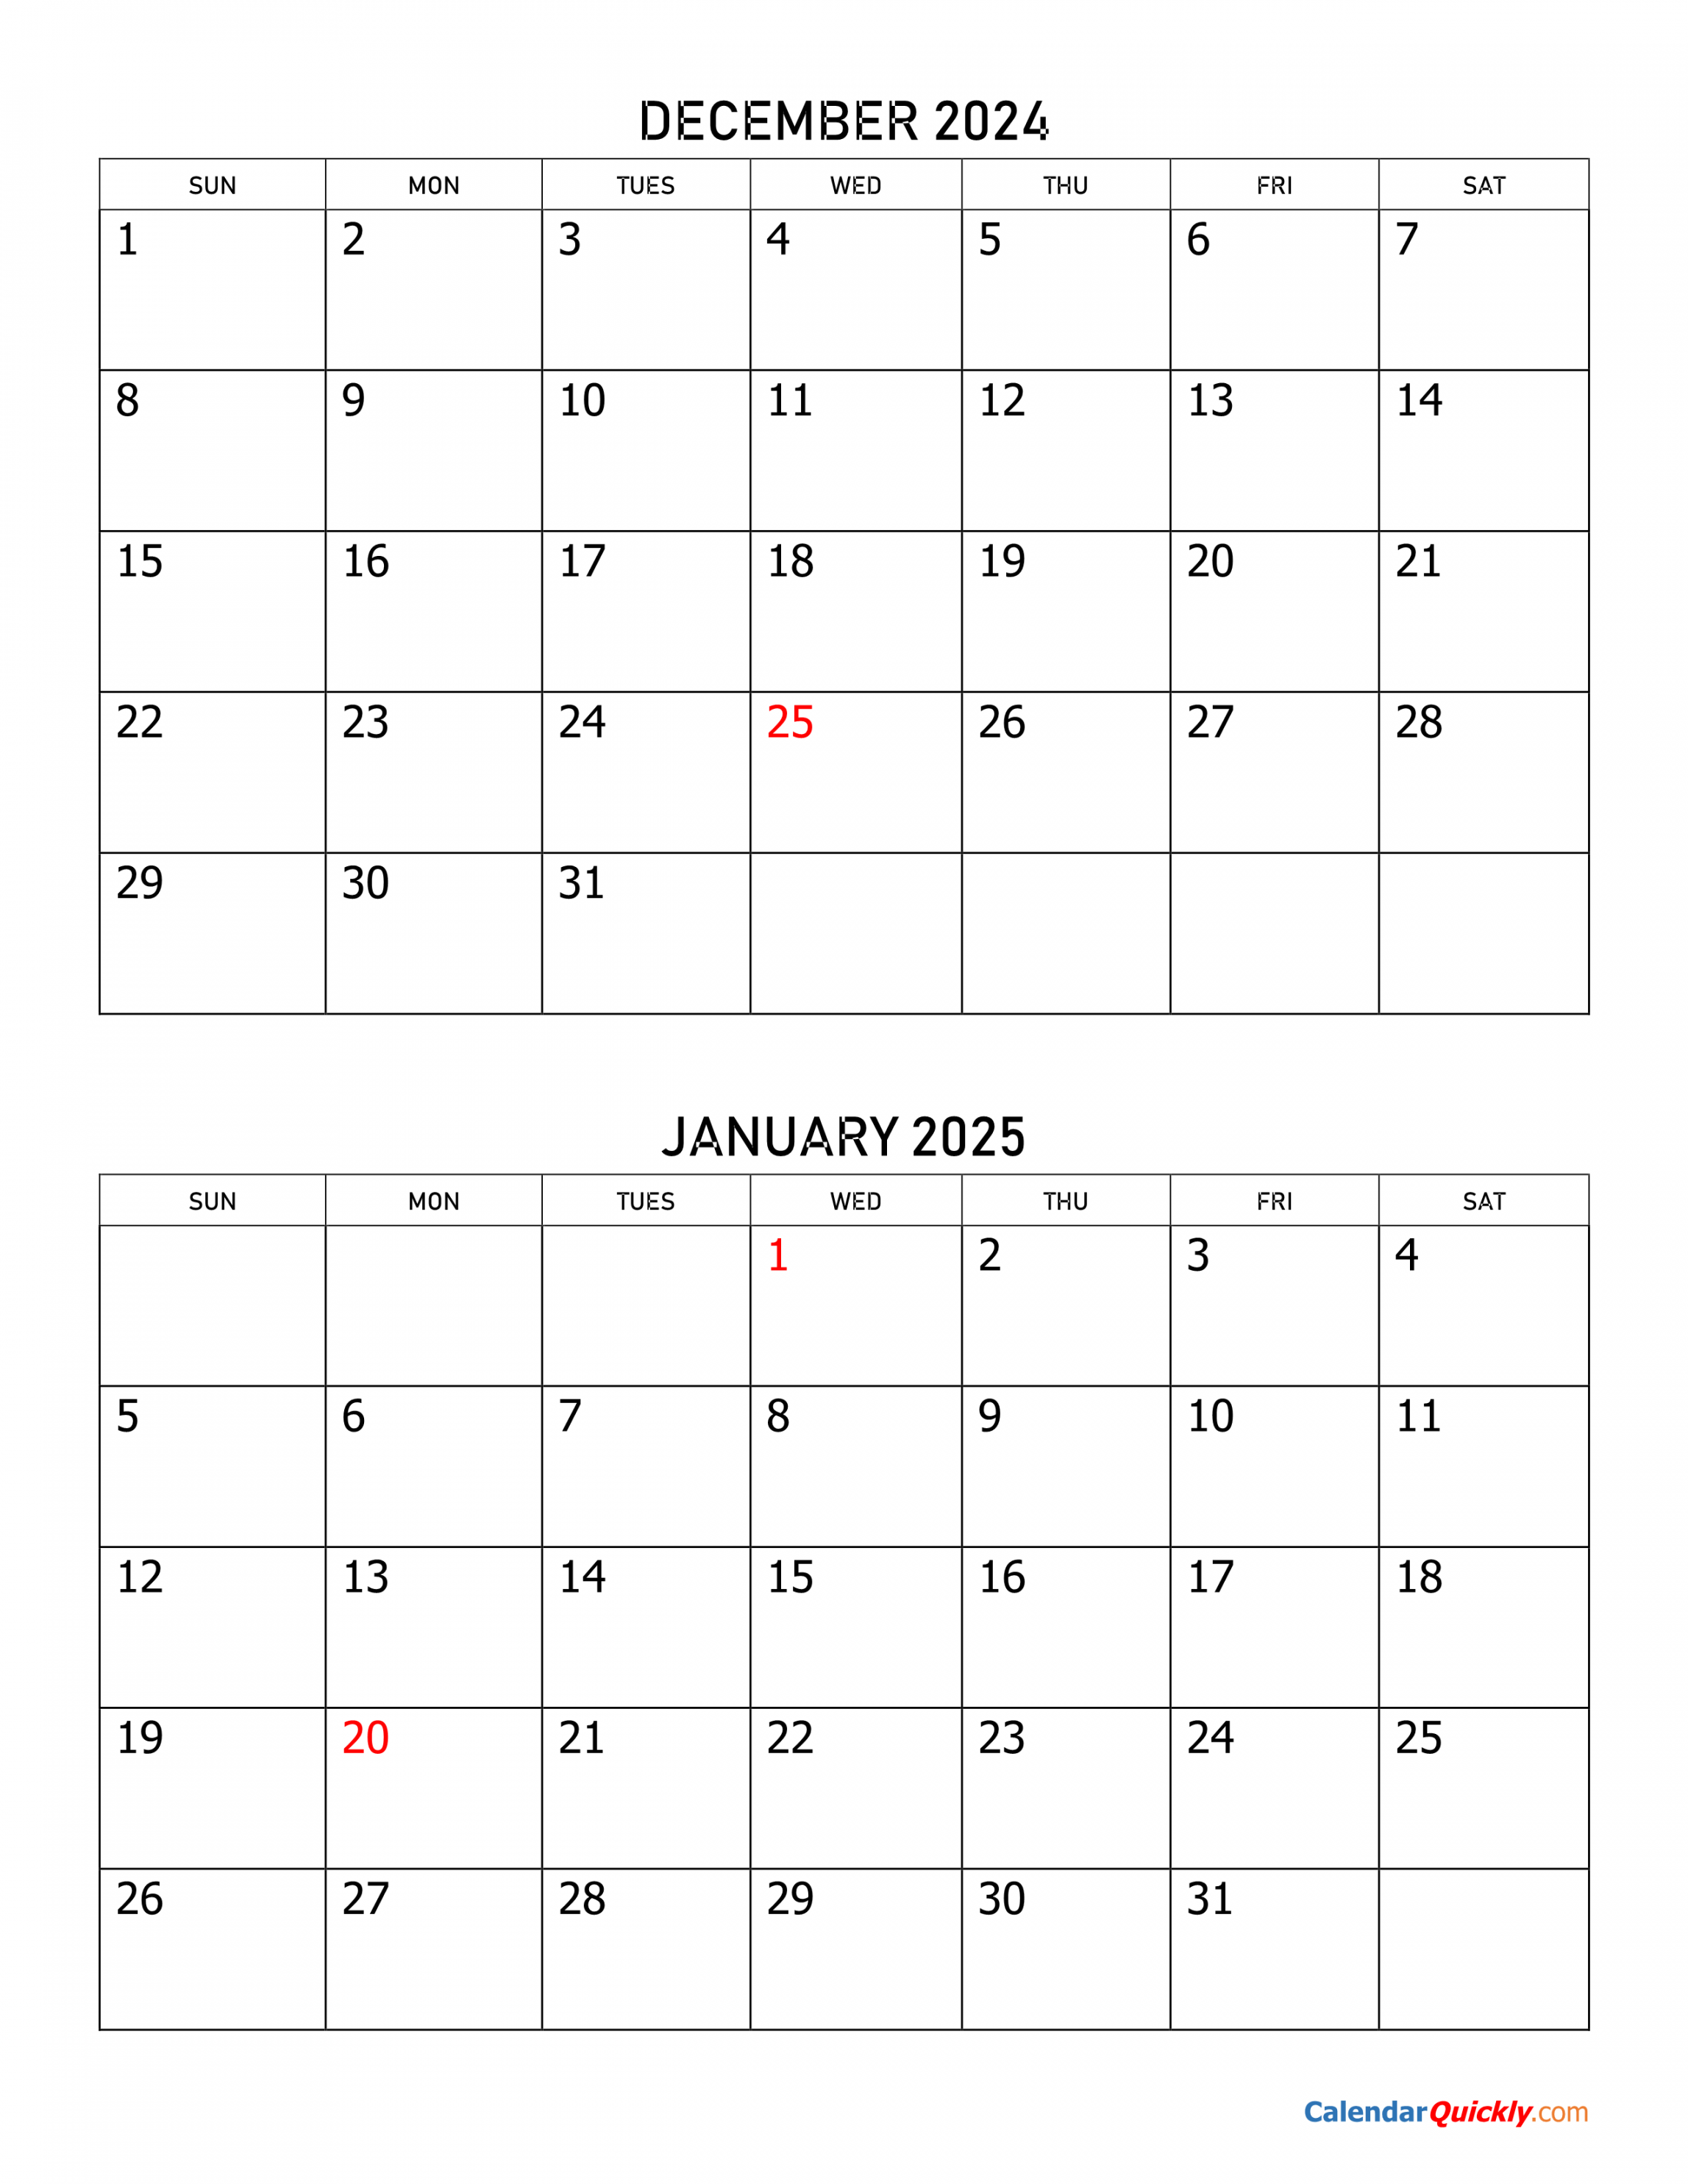 december and january calendar calendar quickly